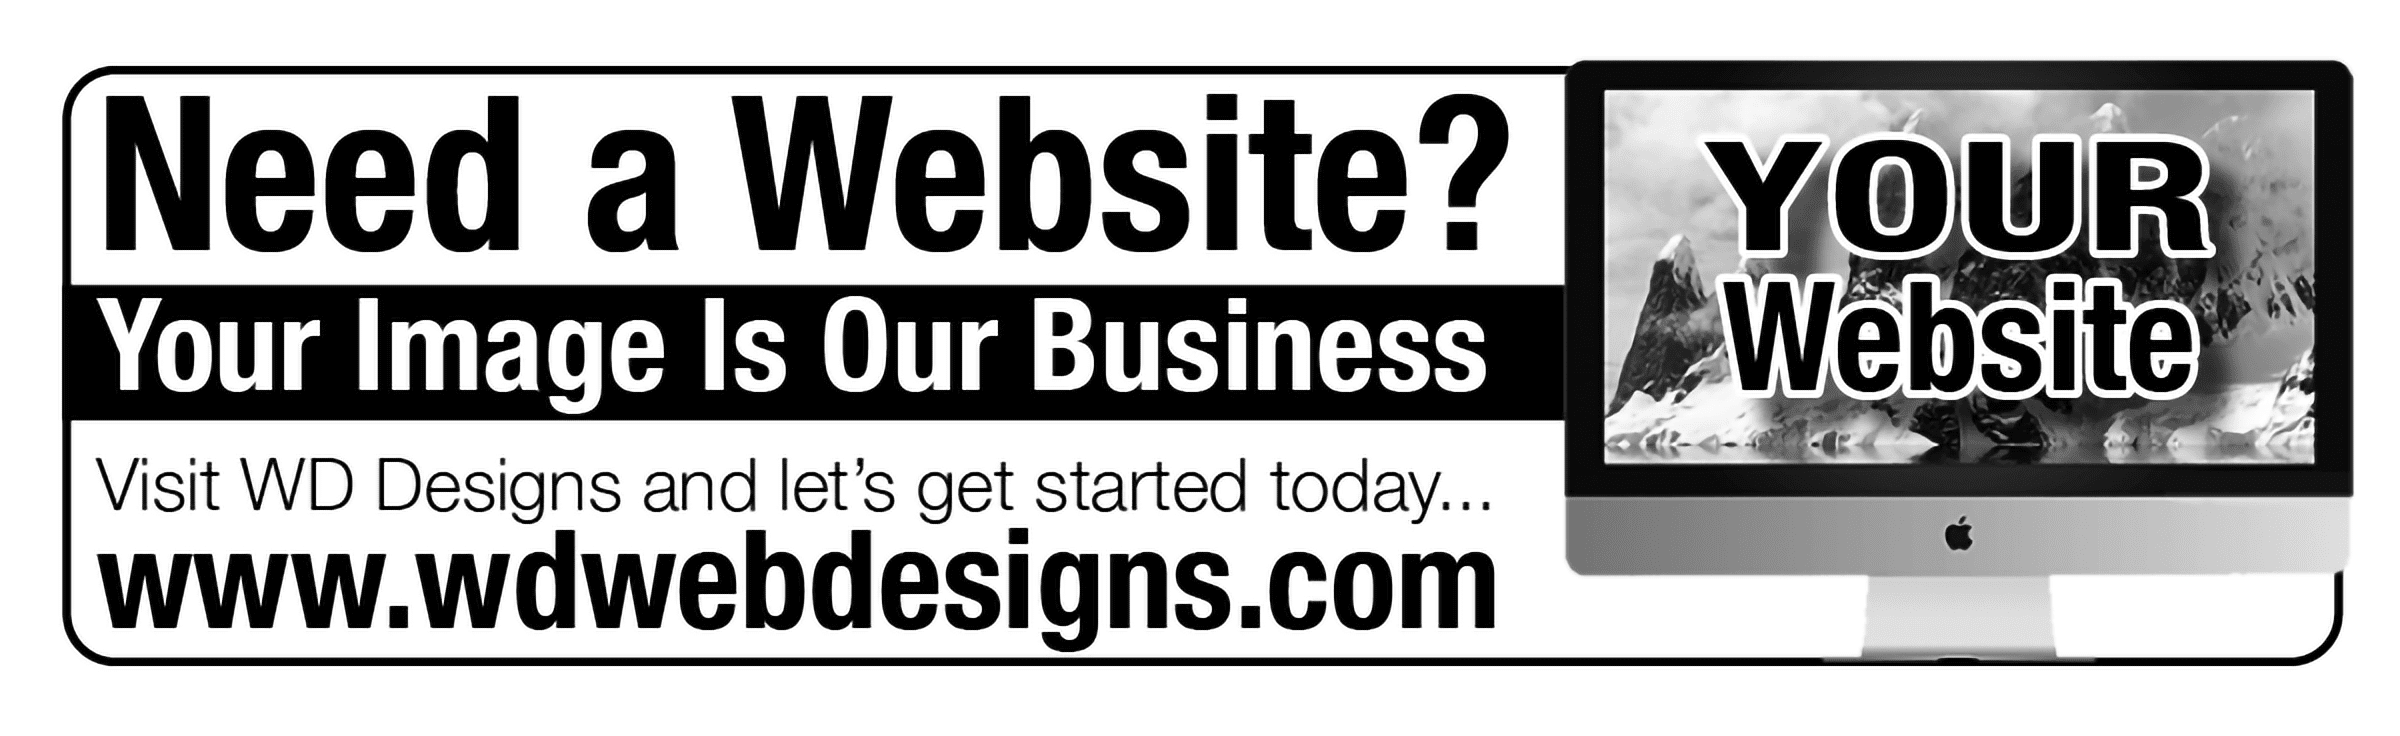 WD Web Designs ad in Coffee News 